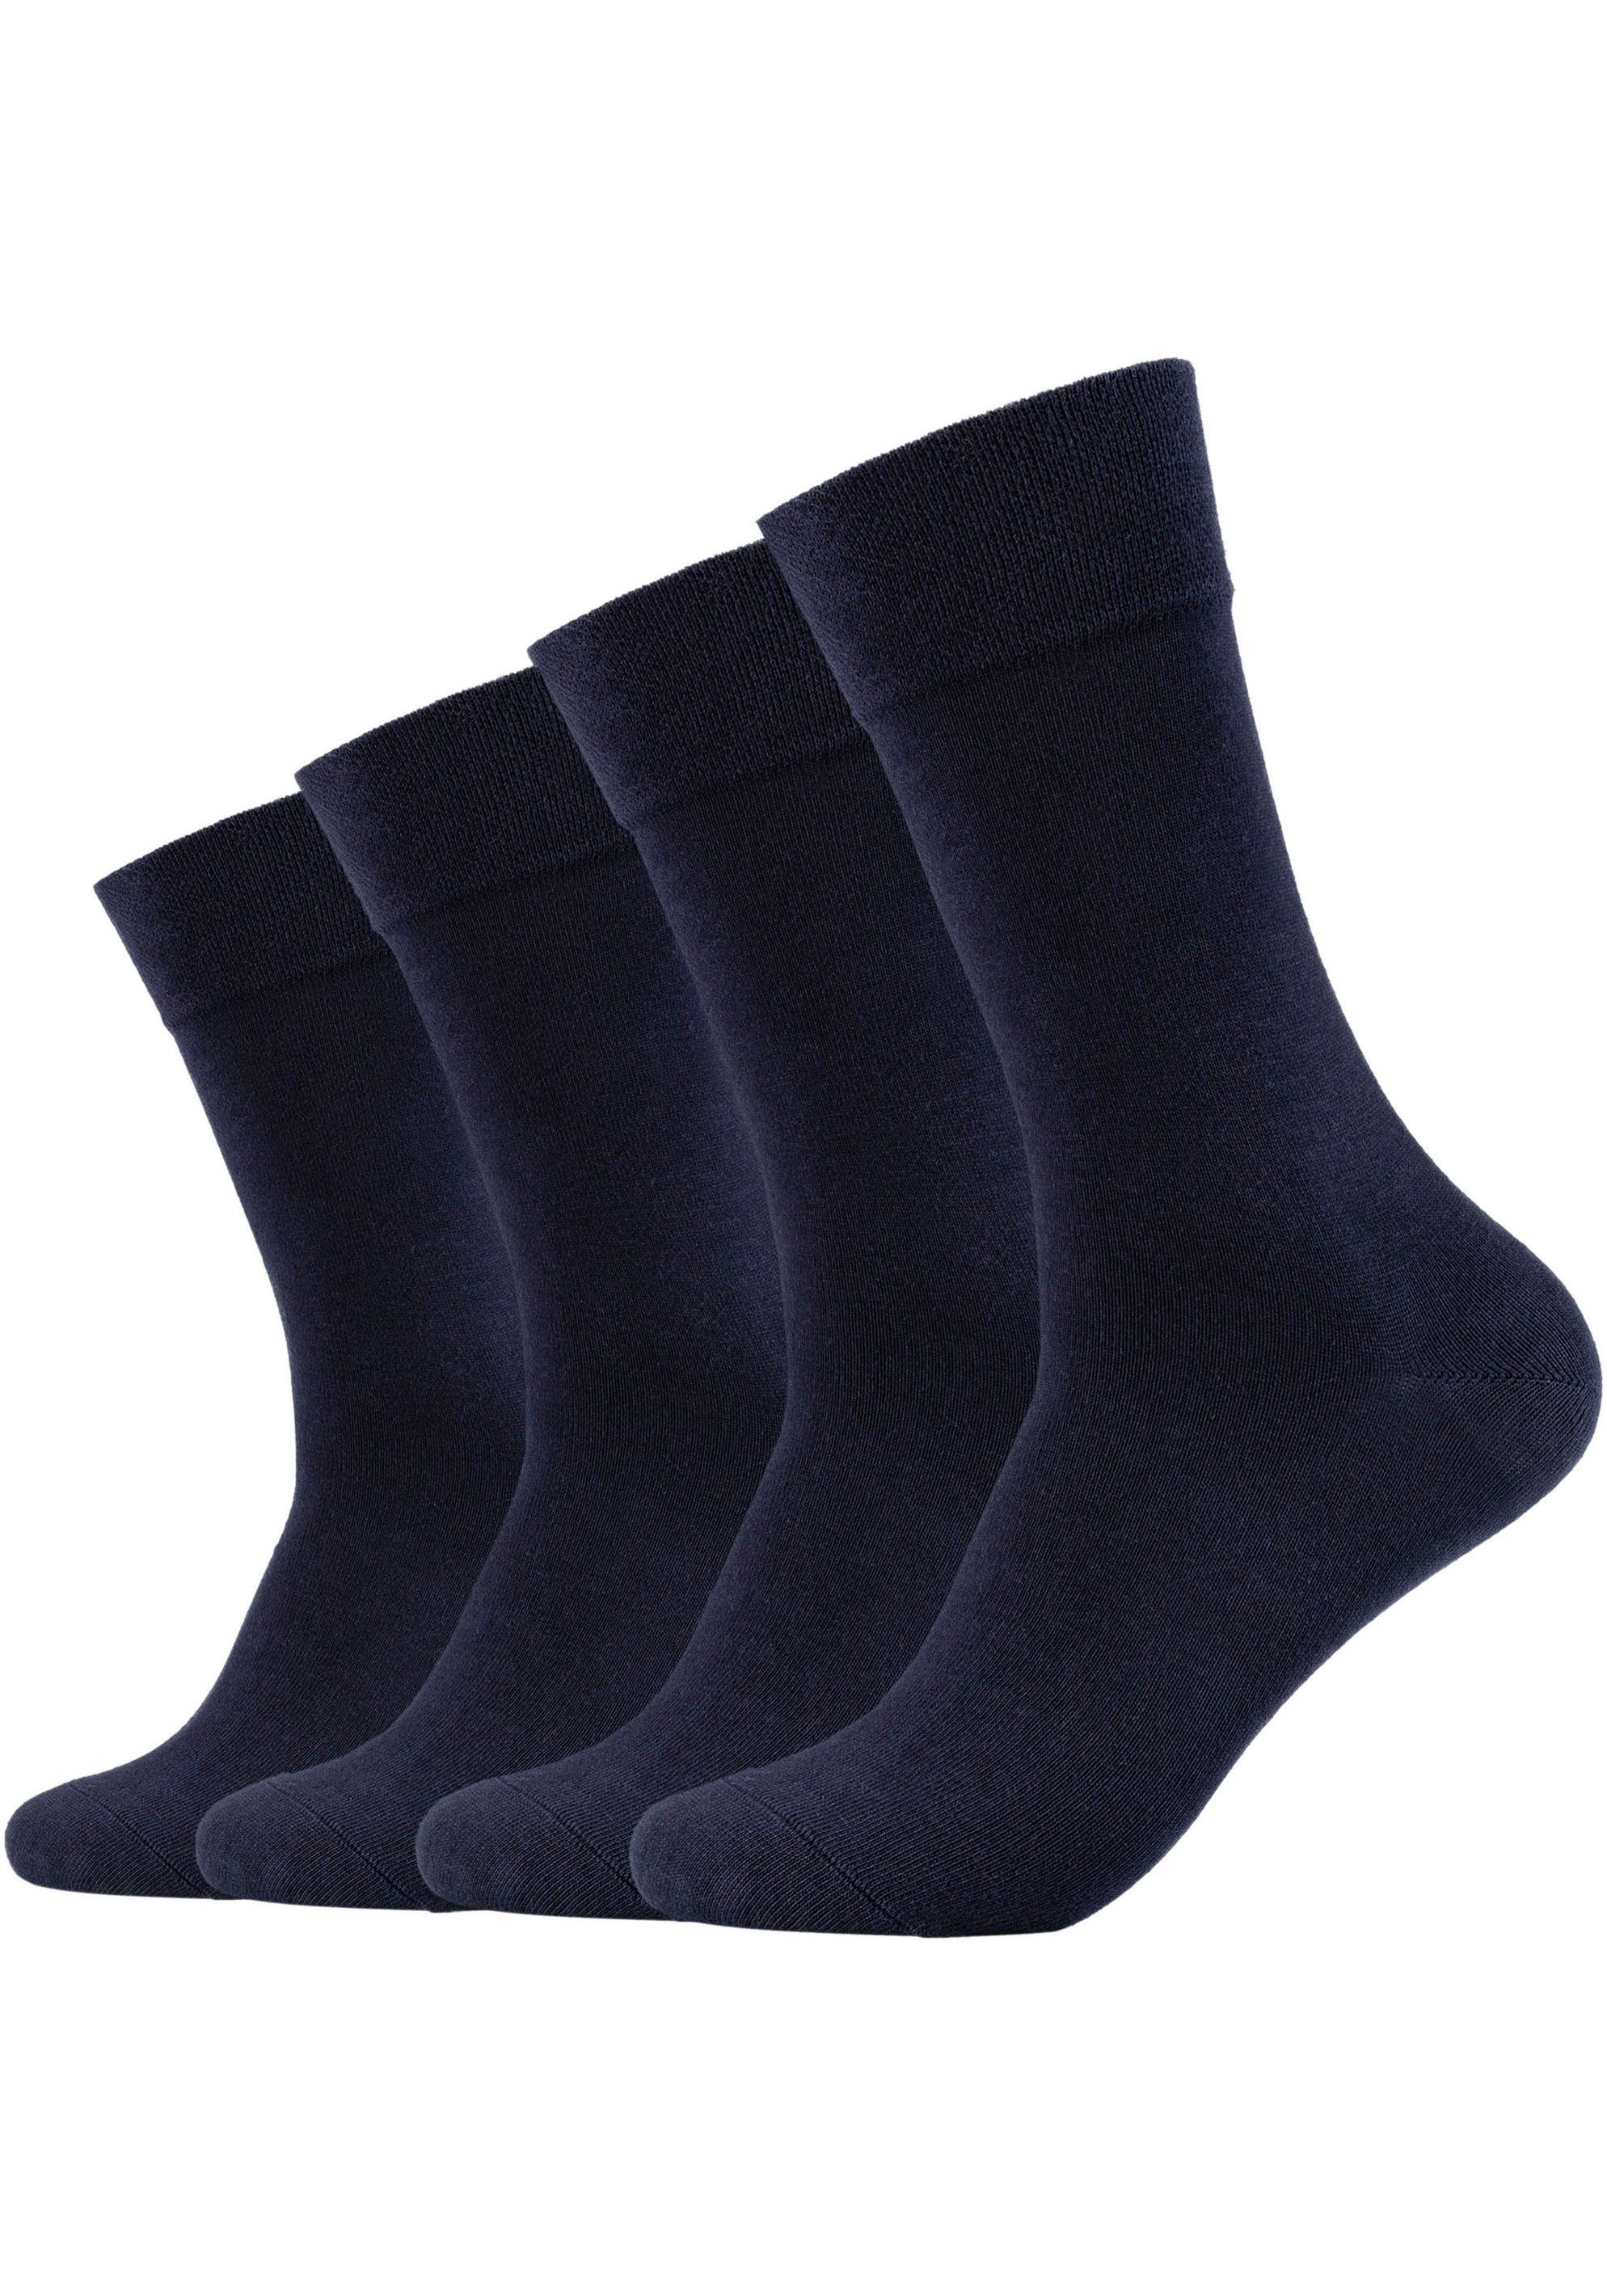 Socken Atmungsaktiv: Bio-Baumwolle 97% navy Camano 4-Paar) (Packung,